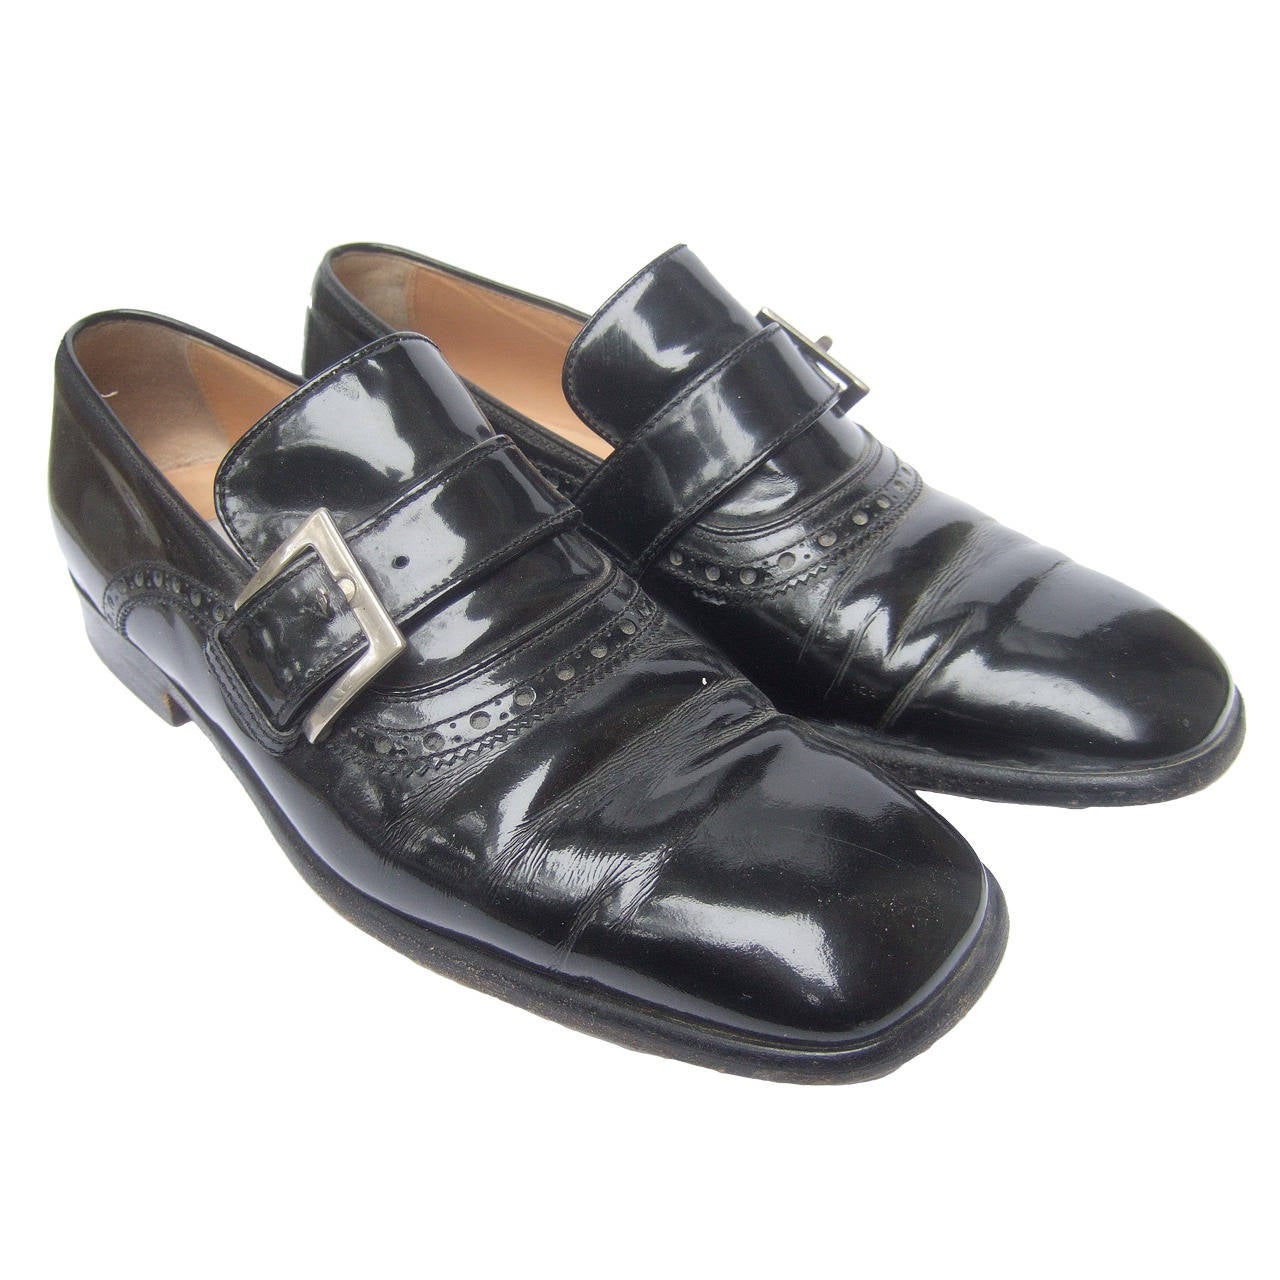 Dolce & Gabbana Men's Black Patent Leather Shoes US Size 8 For Sale